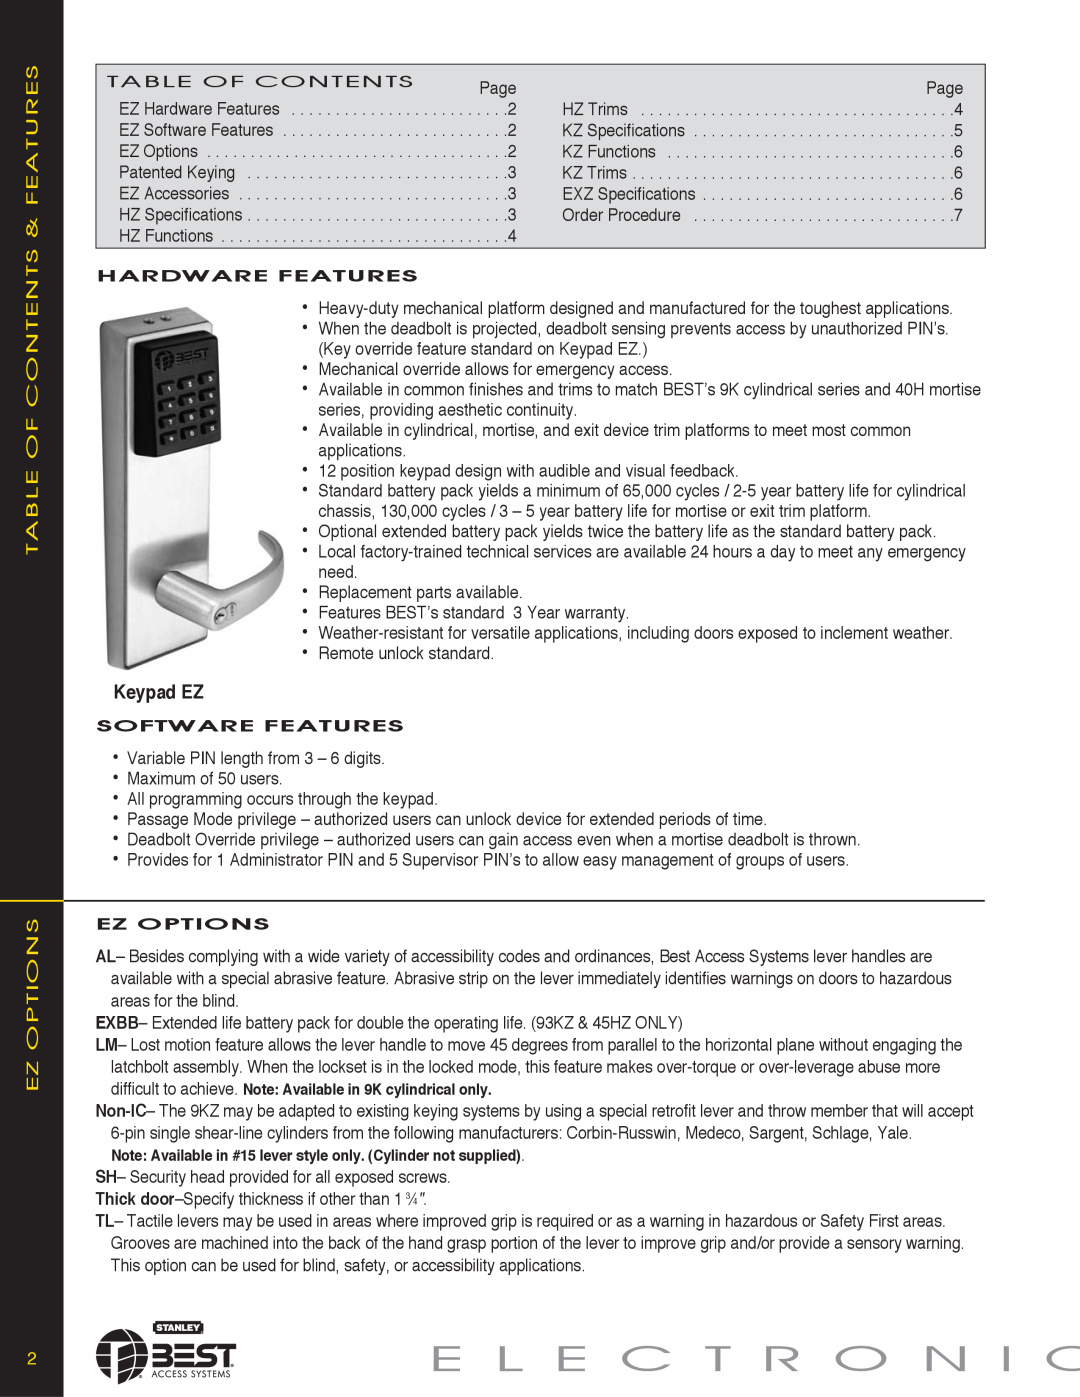 Stanley Black & Decker KEYPAD EZ LOCKS manual E L E C T R O N I C, Table Of Contents & Features Ez Options, Keypad EZ 